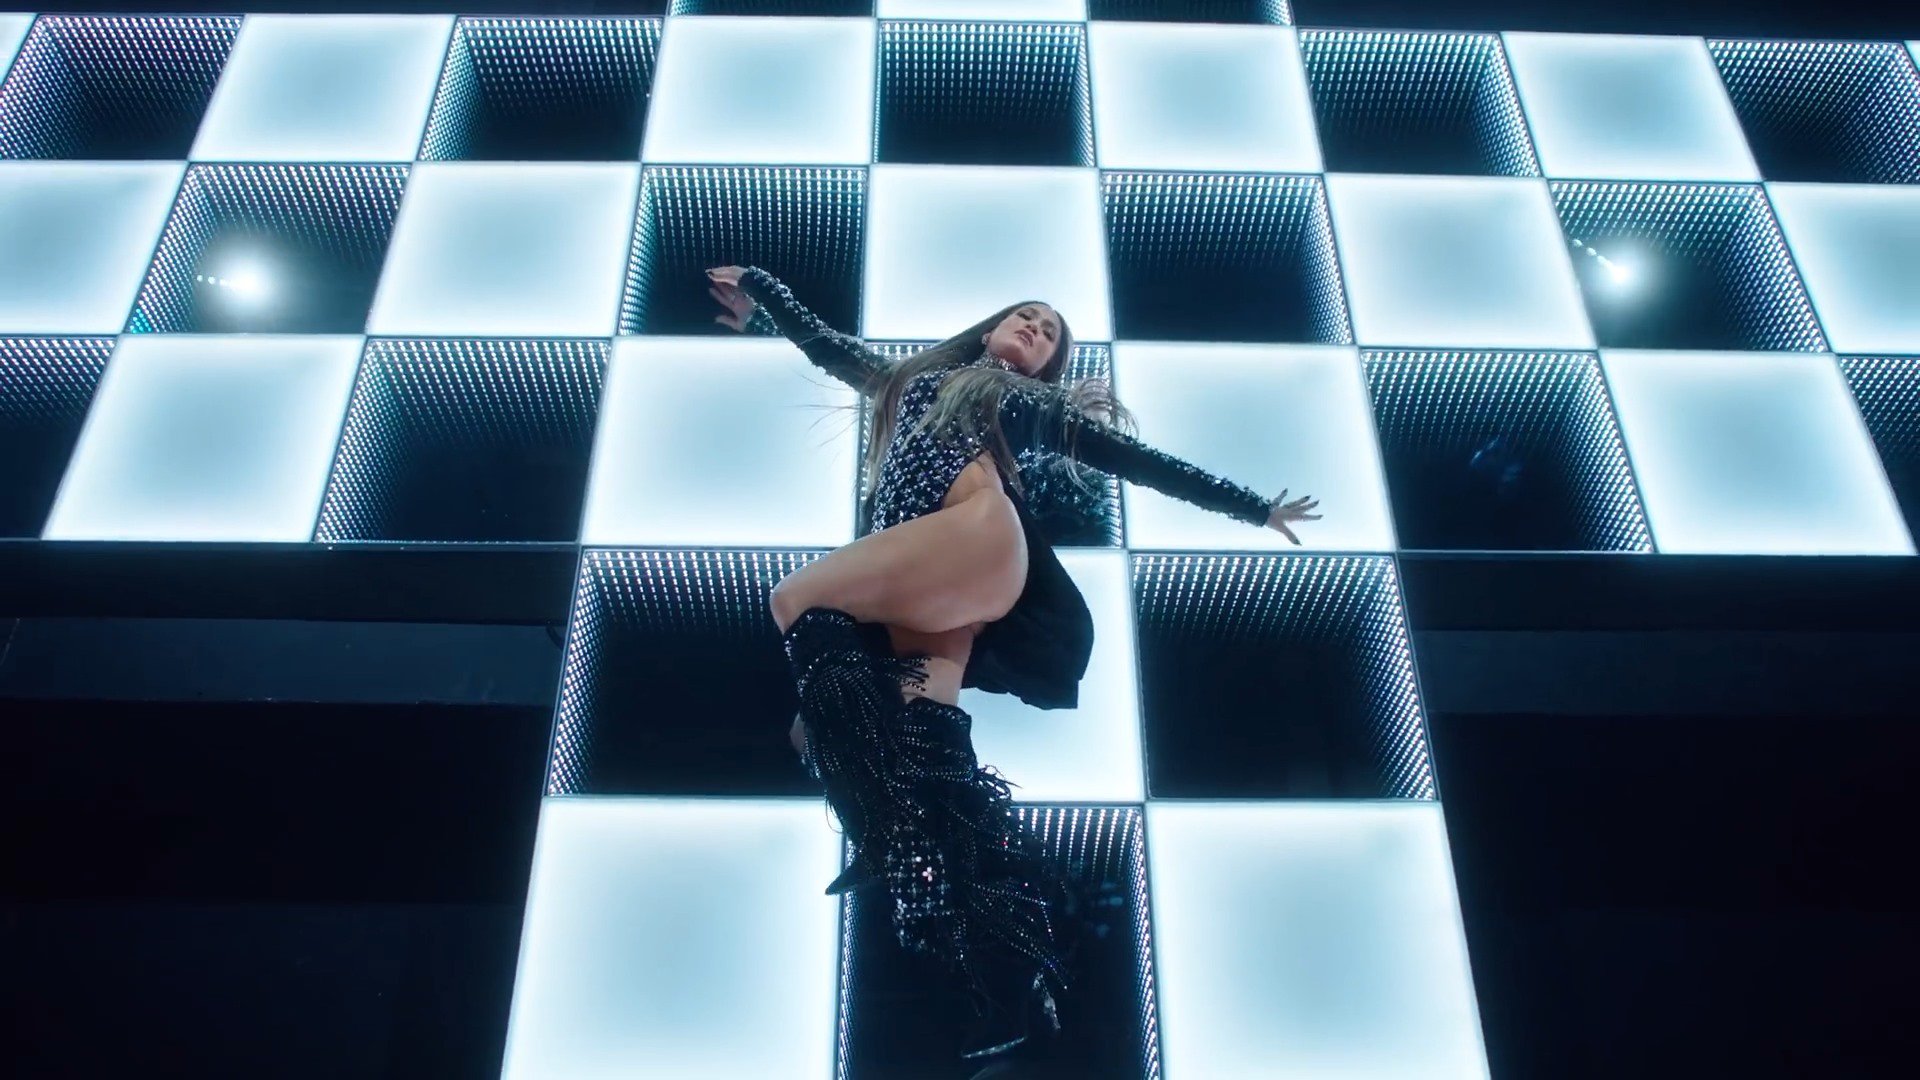 Jennifer Lopez - "Medicine" Music Video Photoshoot. 